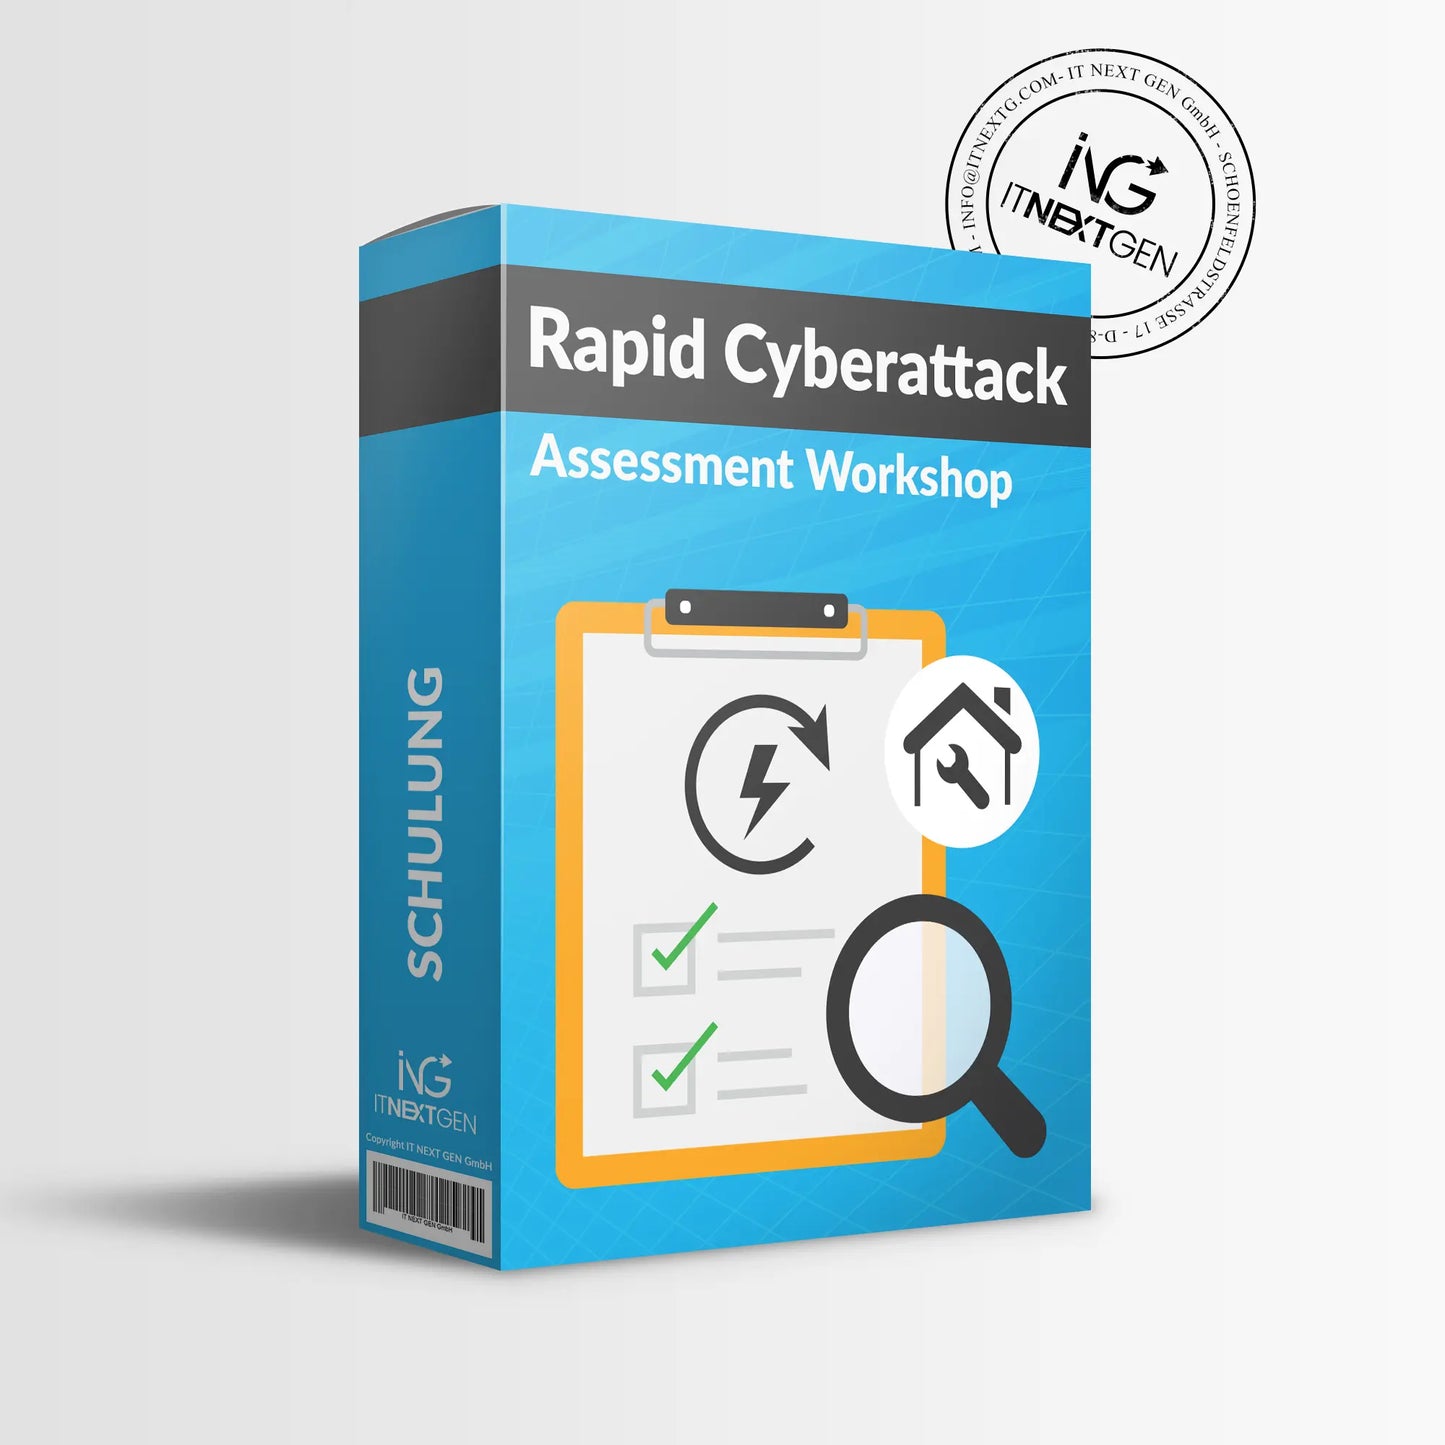 Rapid Cyberattack Assessment Workshop